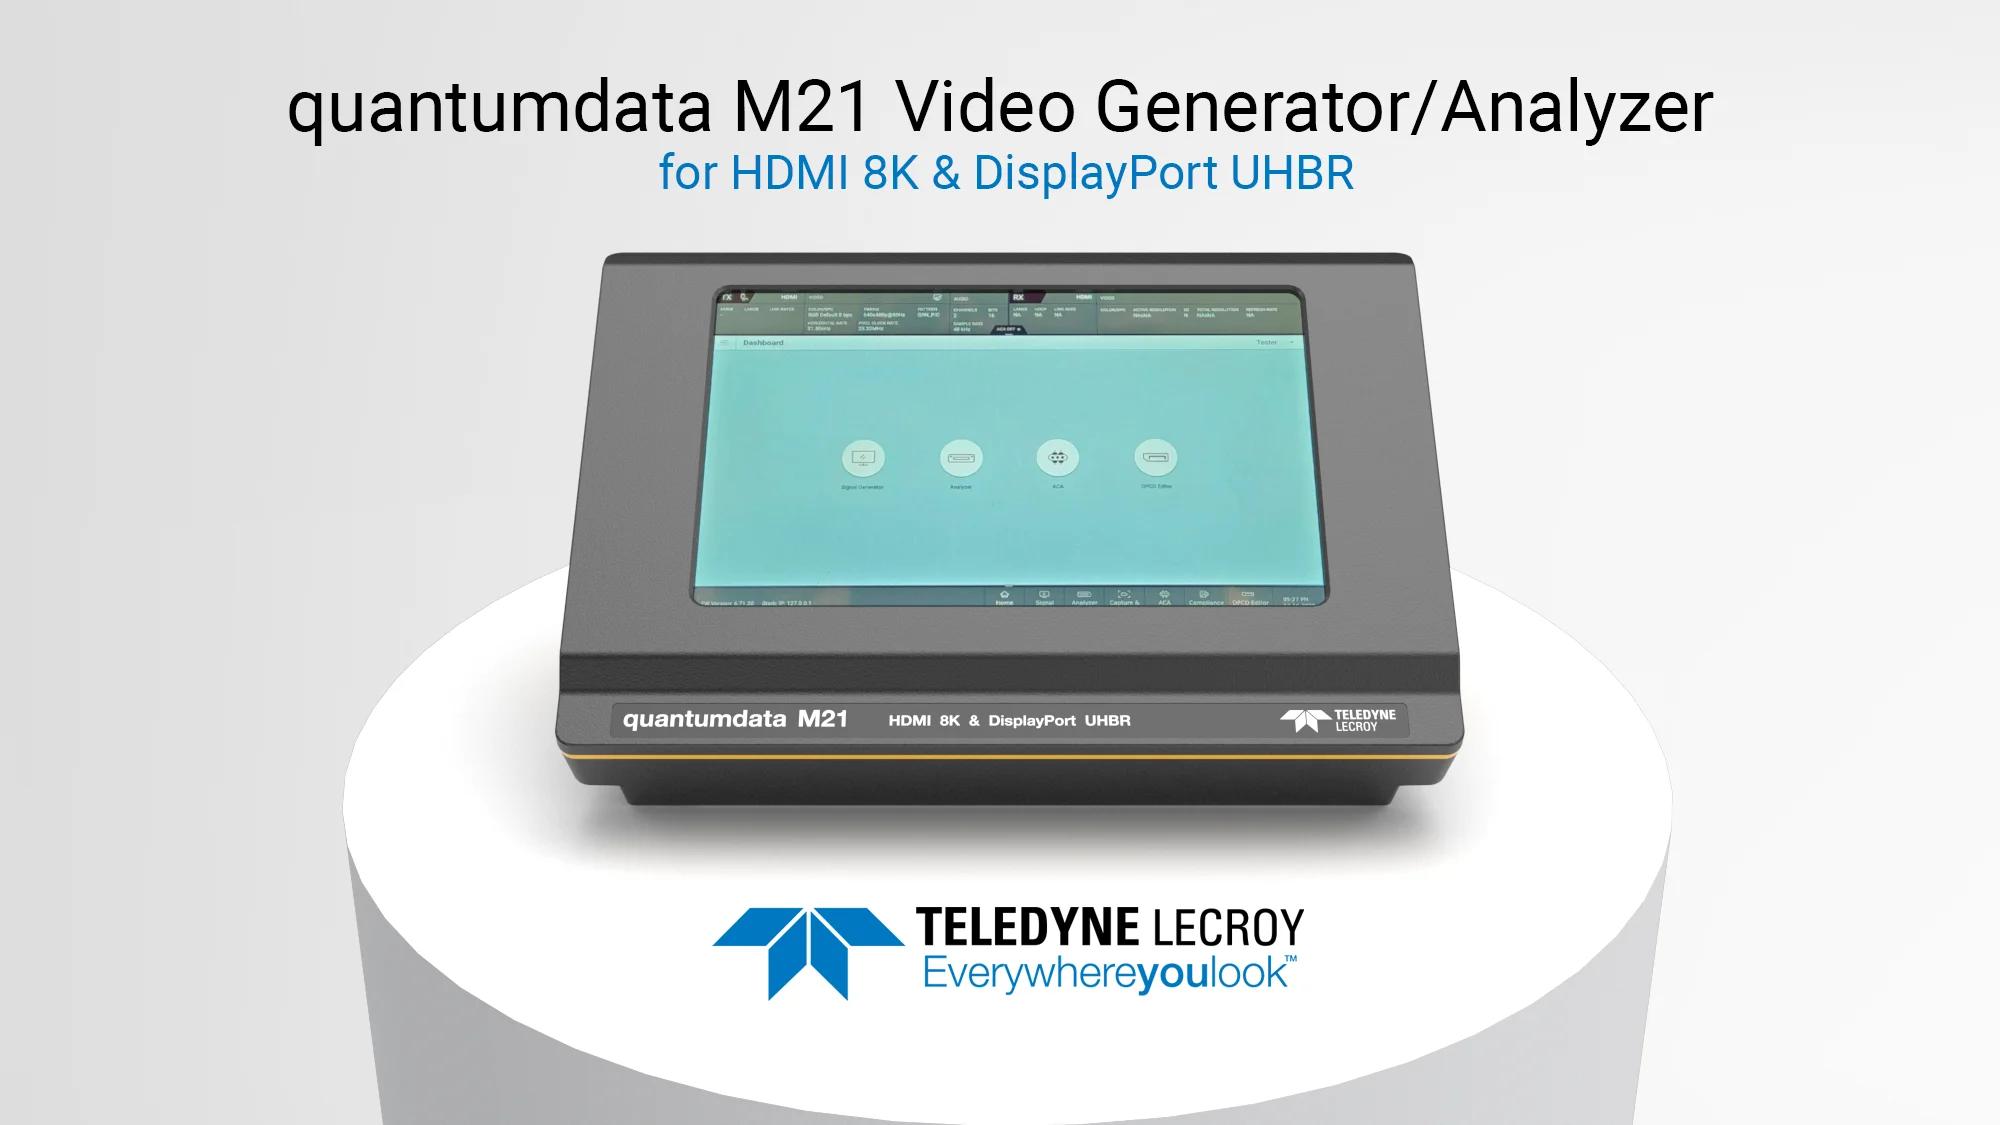 quantumdata m21 Video Analyzer/Generator image